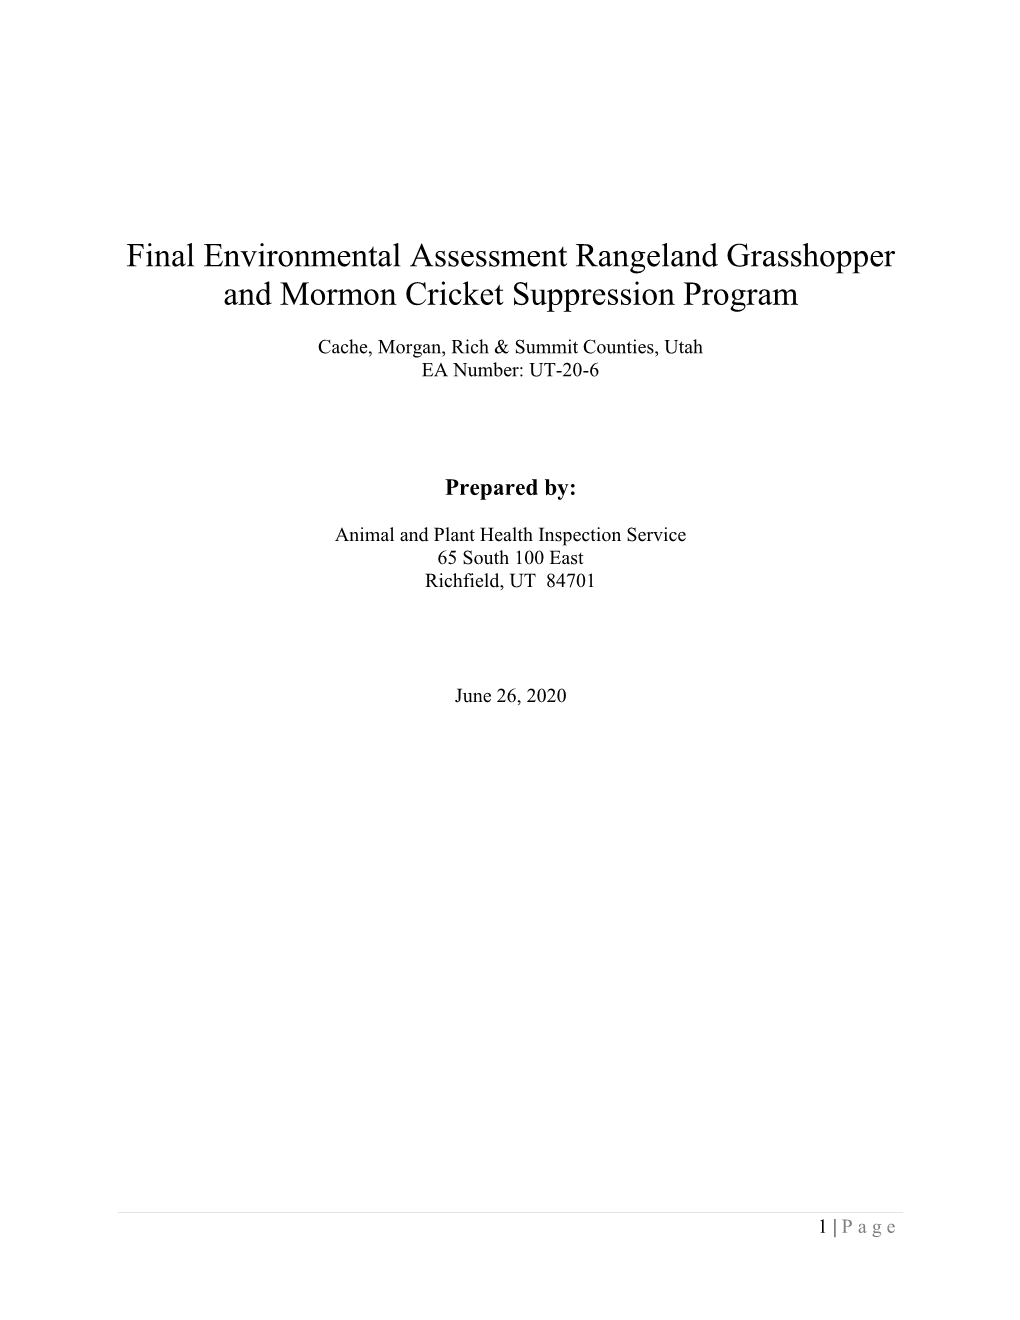 Site-Specific Environmental Assessment Rangeland Grasshopper and Mormon Cricket Suppression Program Cache, Morgan, Rich & Summit Counties, Utah